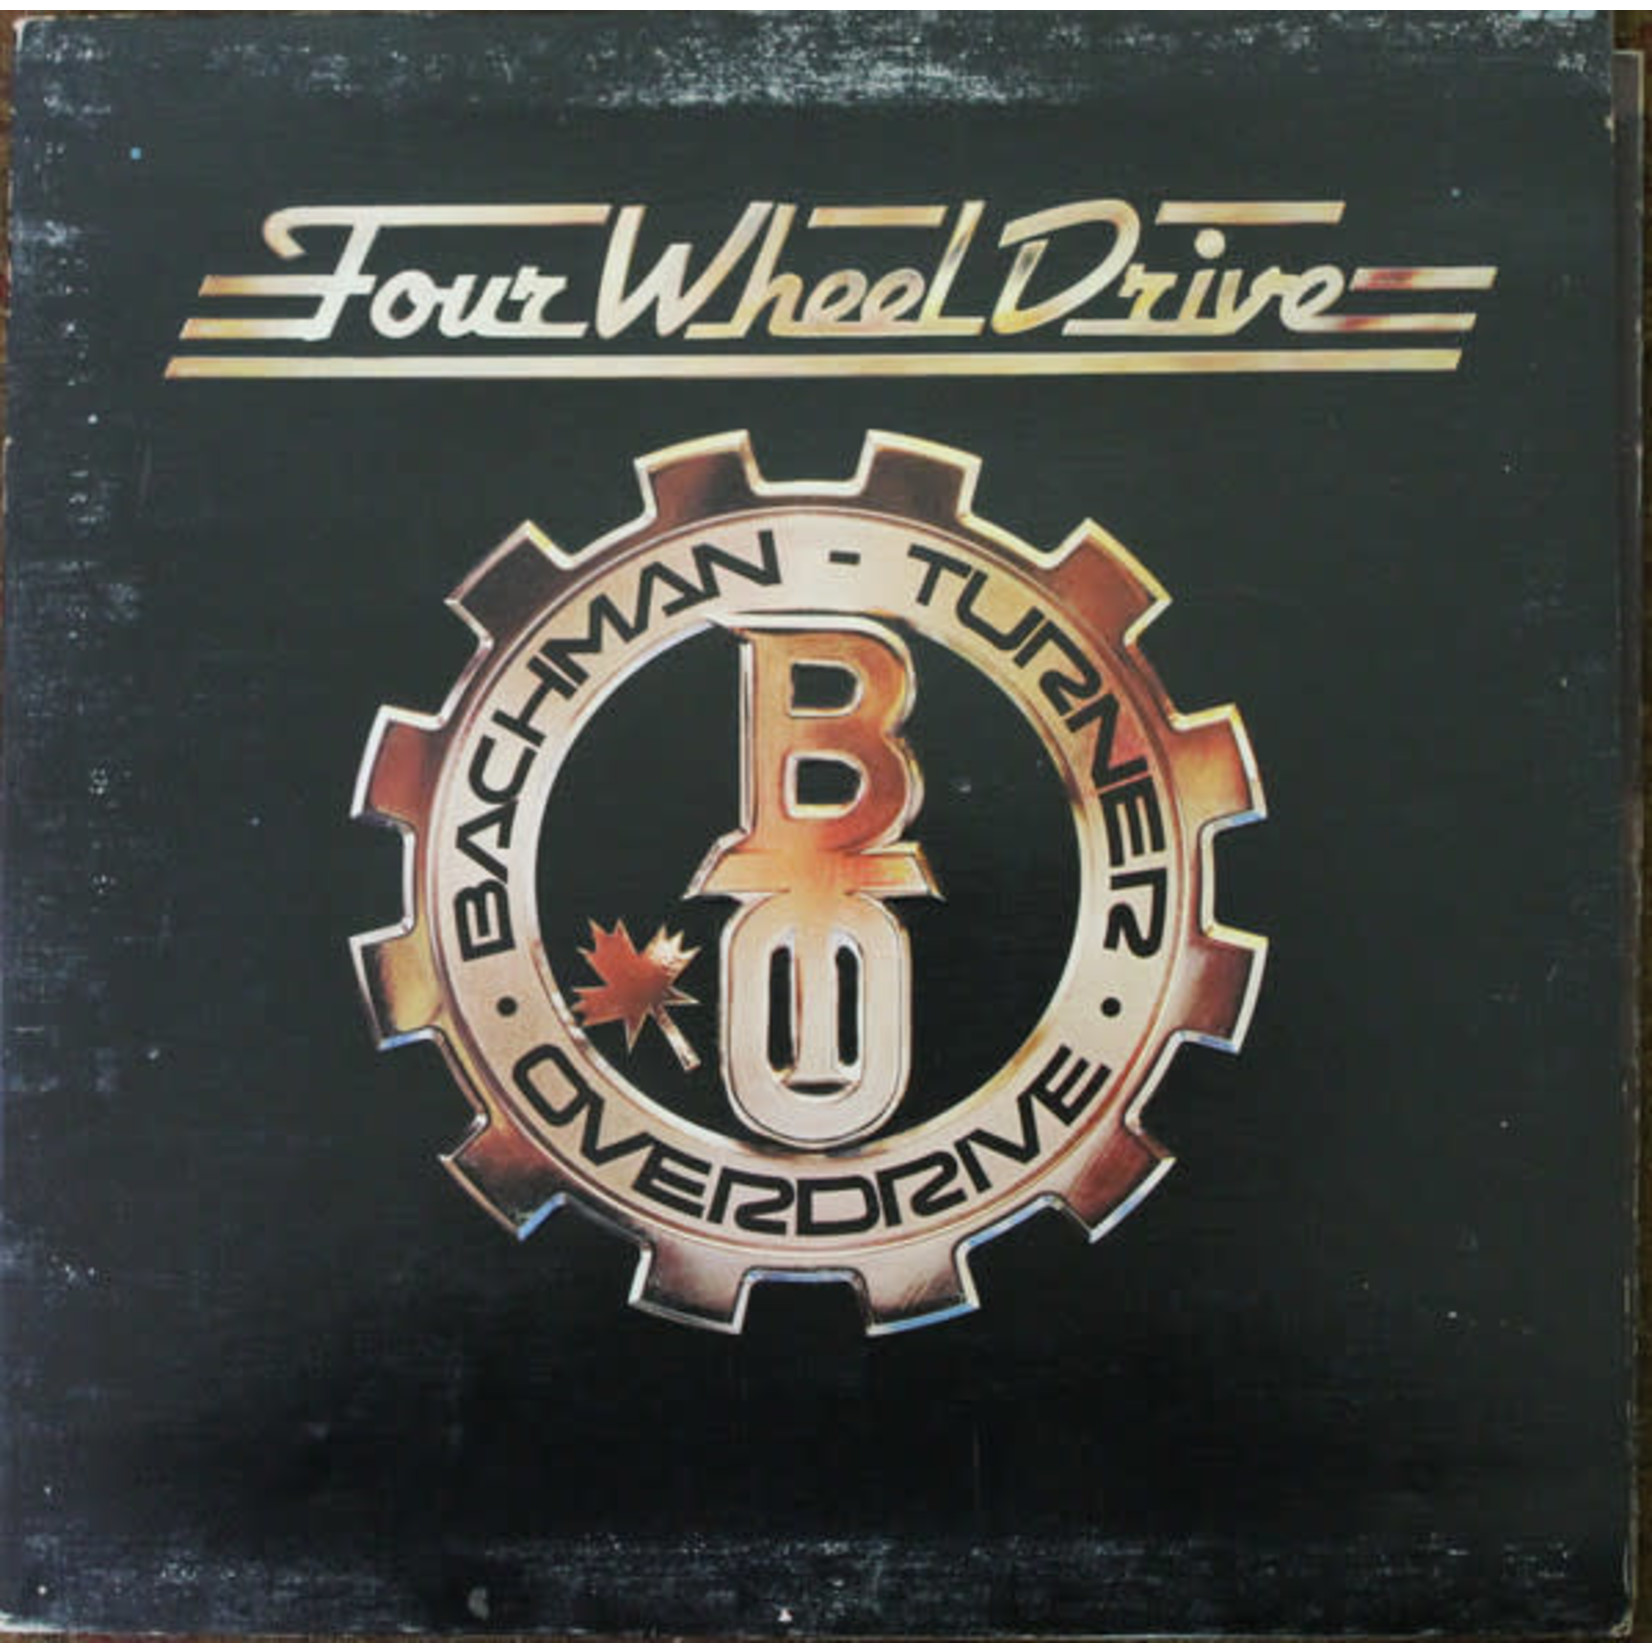 Bachman-Turner Overdrive Bachman-Turner Overdrive - Four Wheel Drive (LP, SRM 1-1027, G)